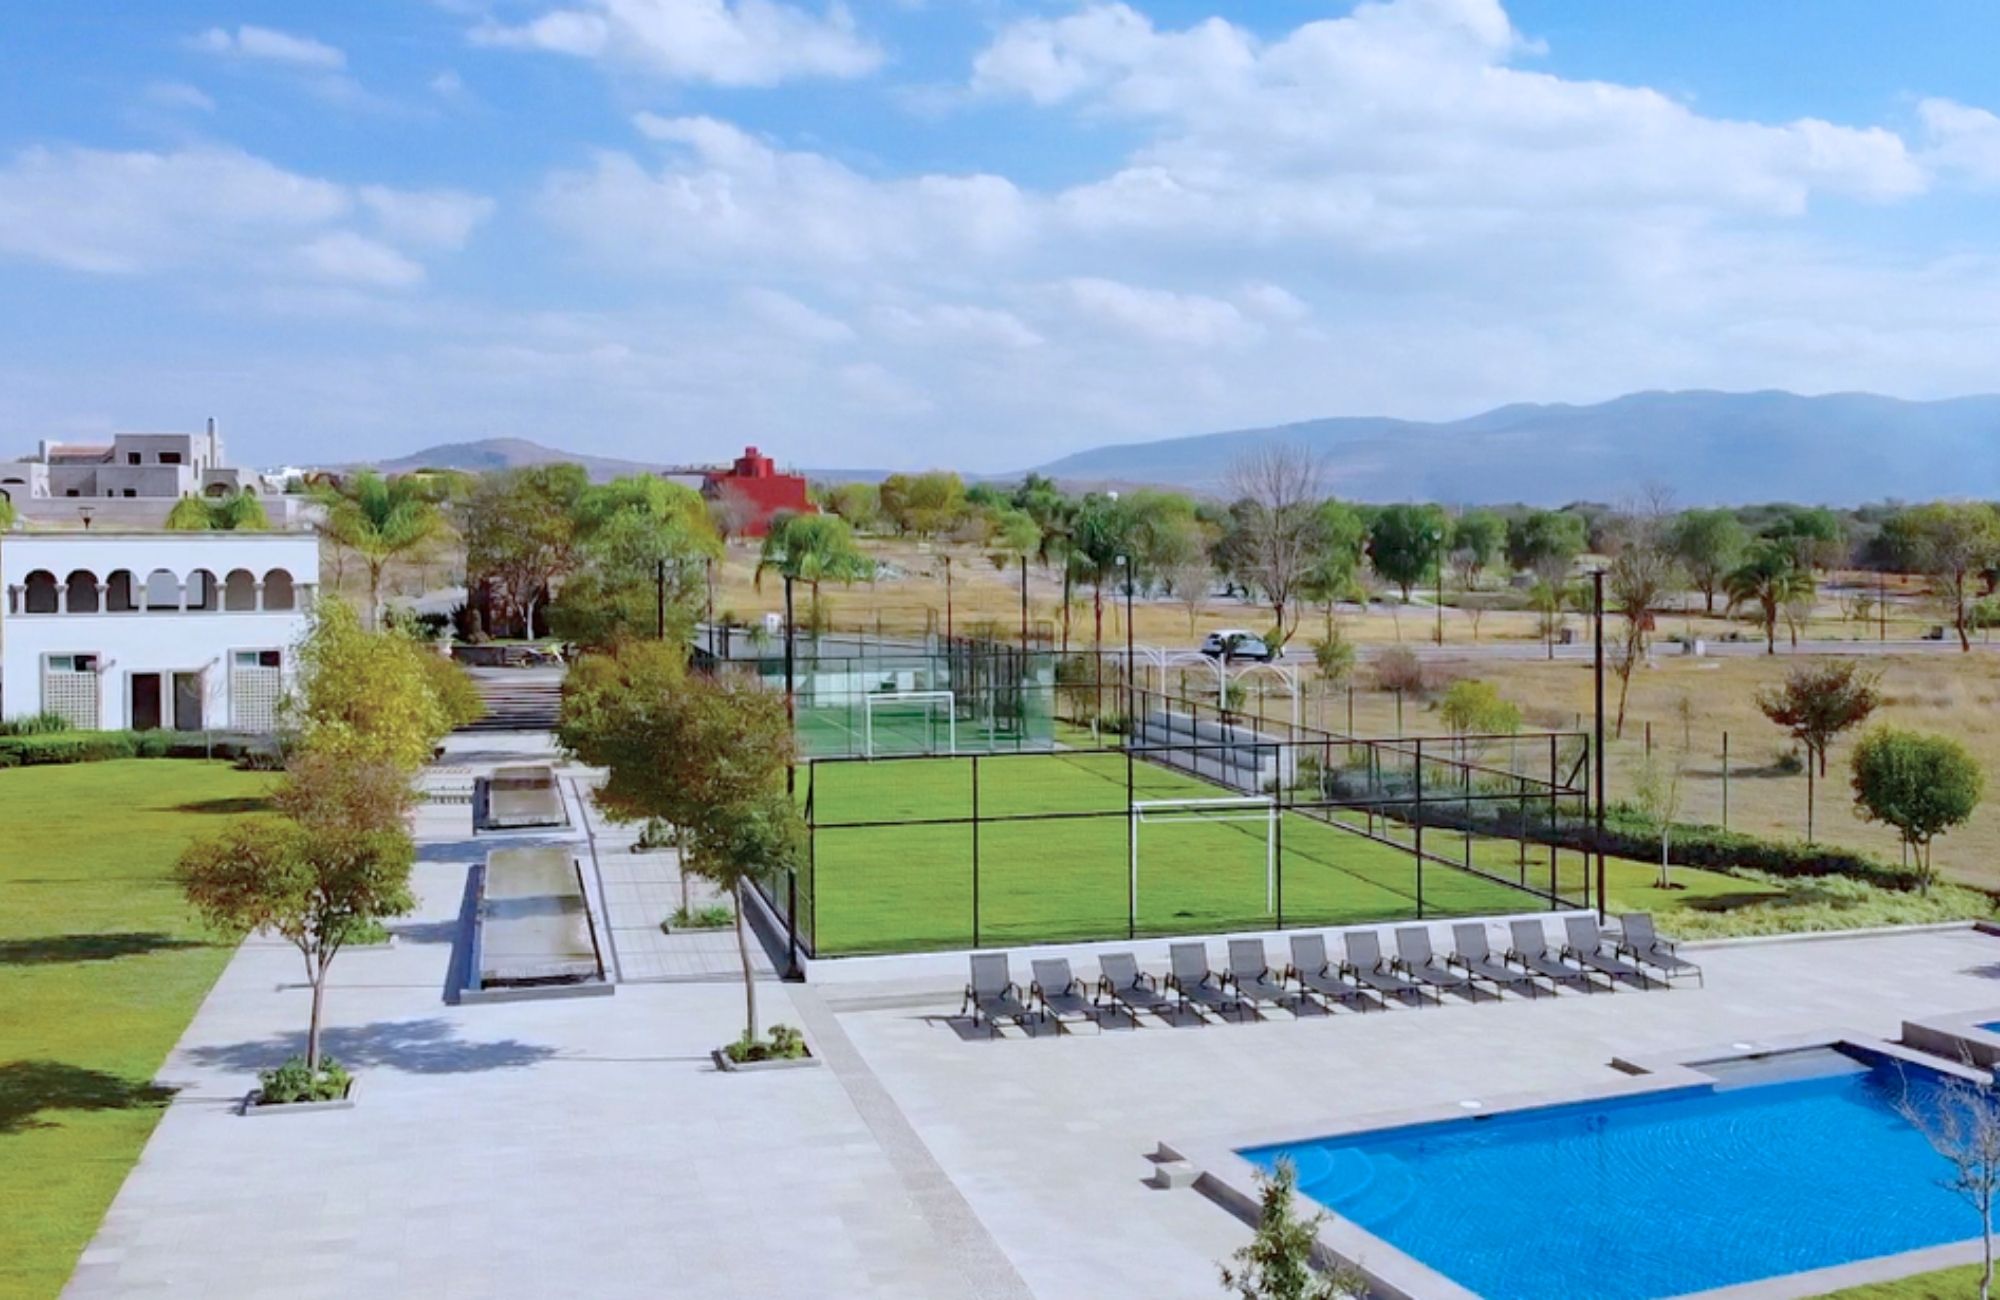 670 sqm lot, pool, gym, jacuzzi, for sale in San Miguel de Allende.